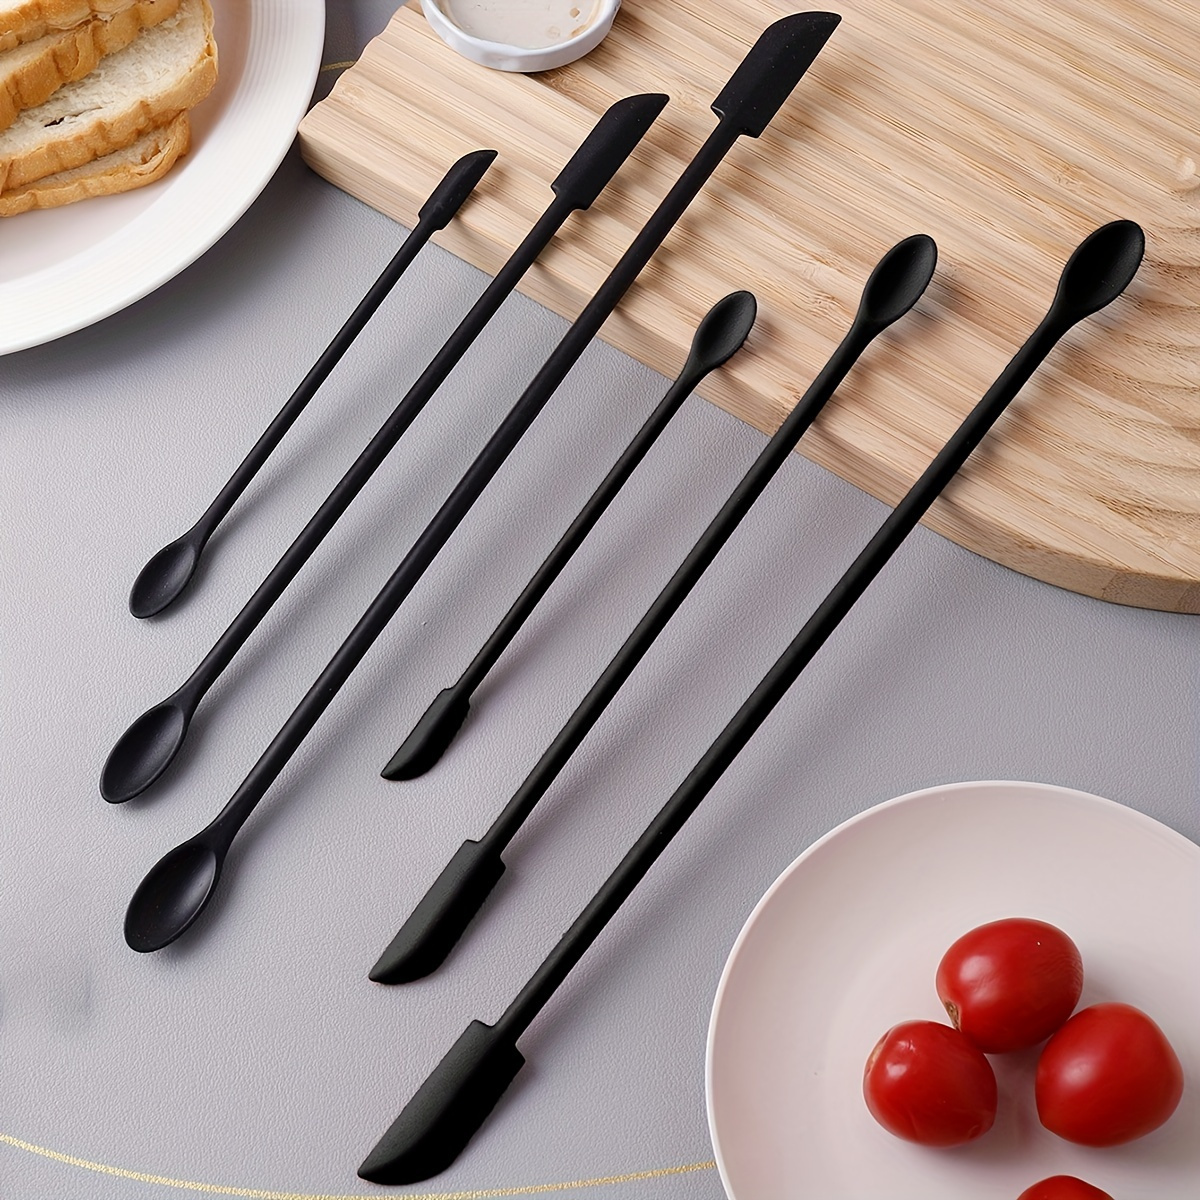  CORE KITCHEN MINI UTENSIL SET (3 pcs) includeds spoontula, all  purpose spoontula & pointed spatula.: Home & Kitchen